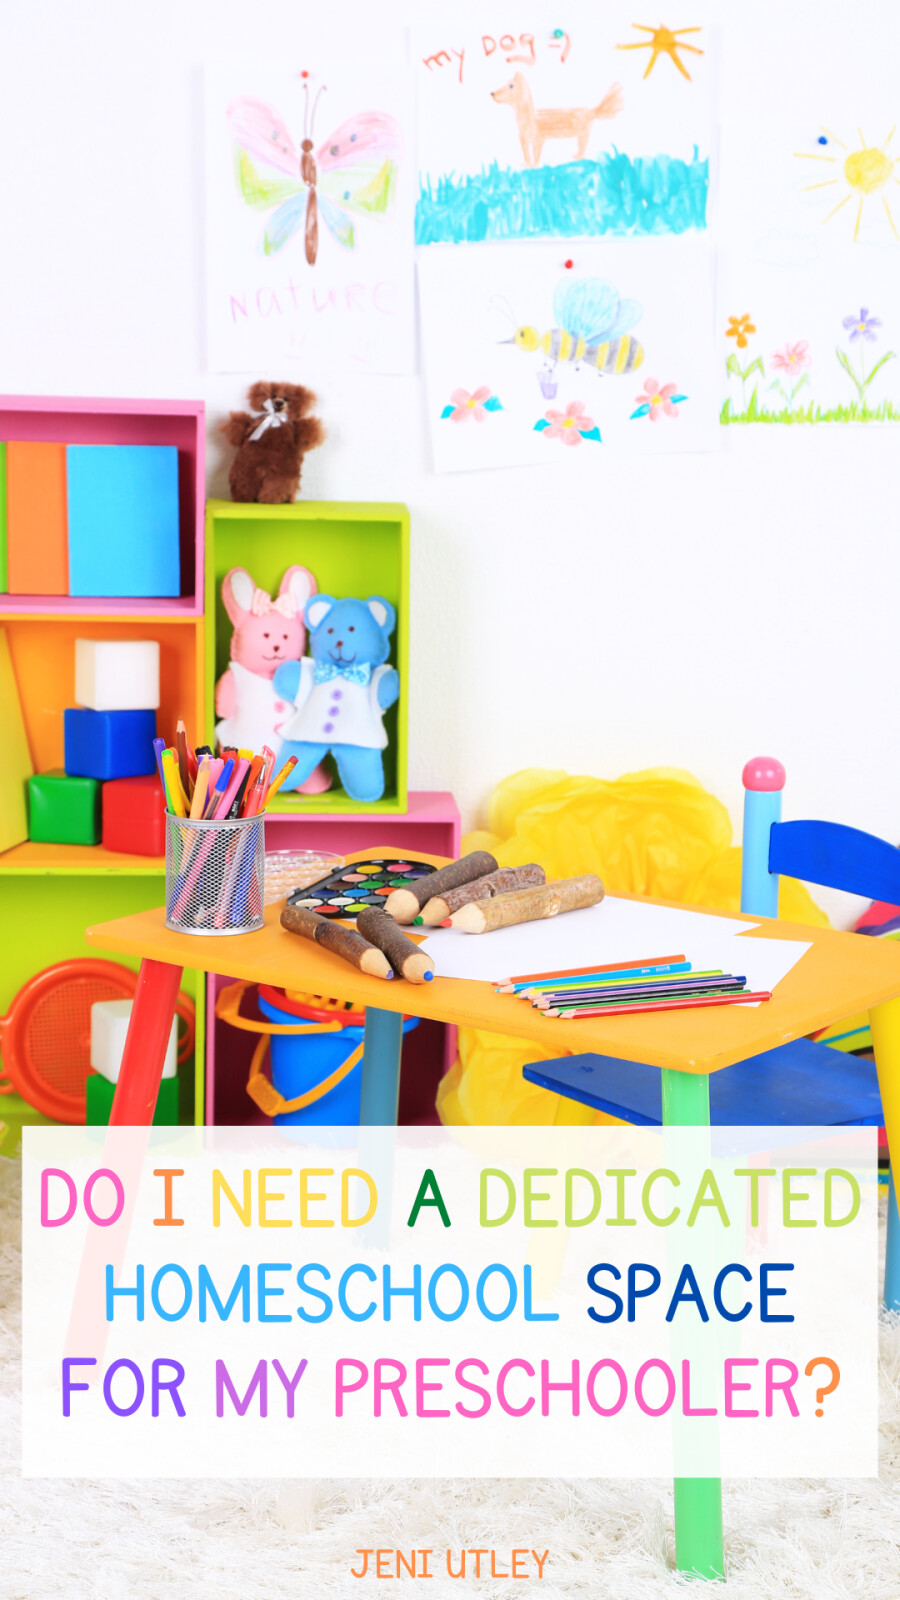 Do I need a dedicated homeschool space for my preschooler?